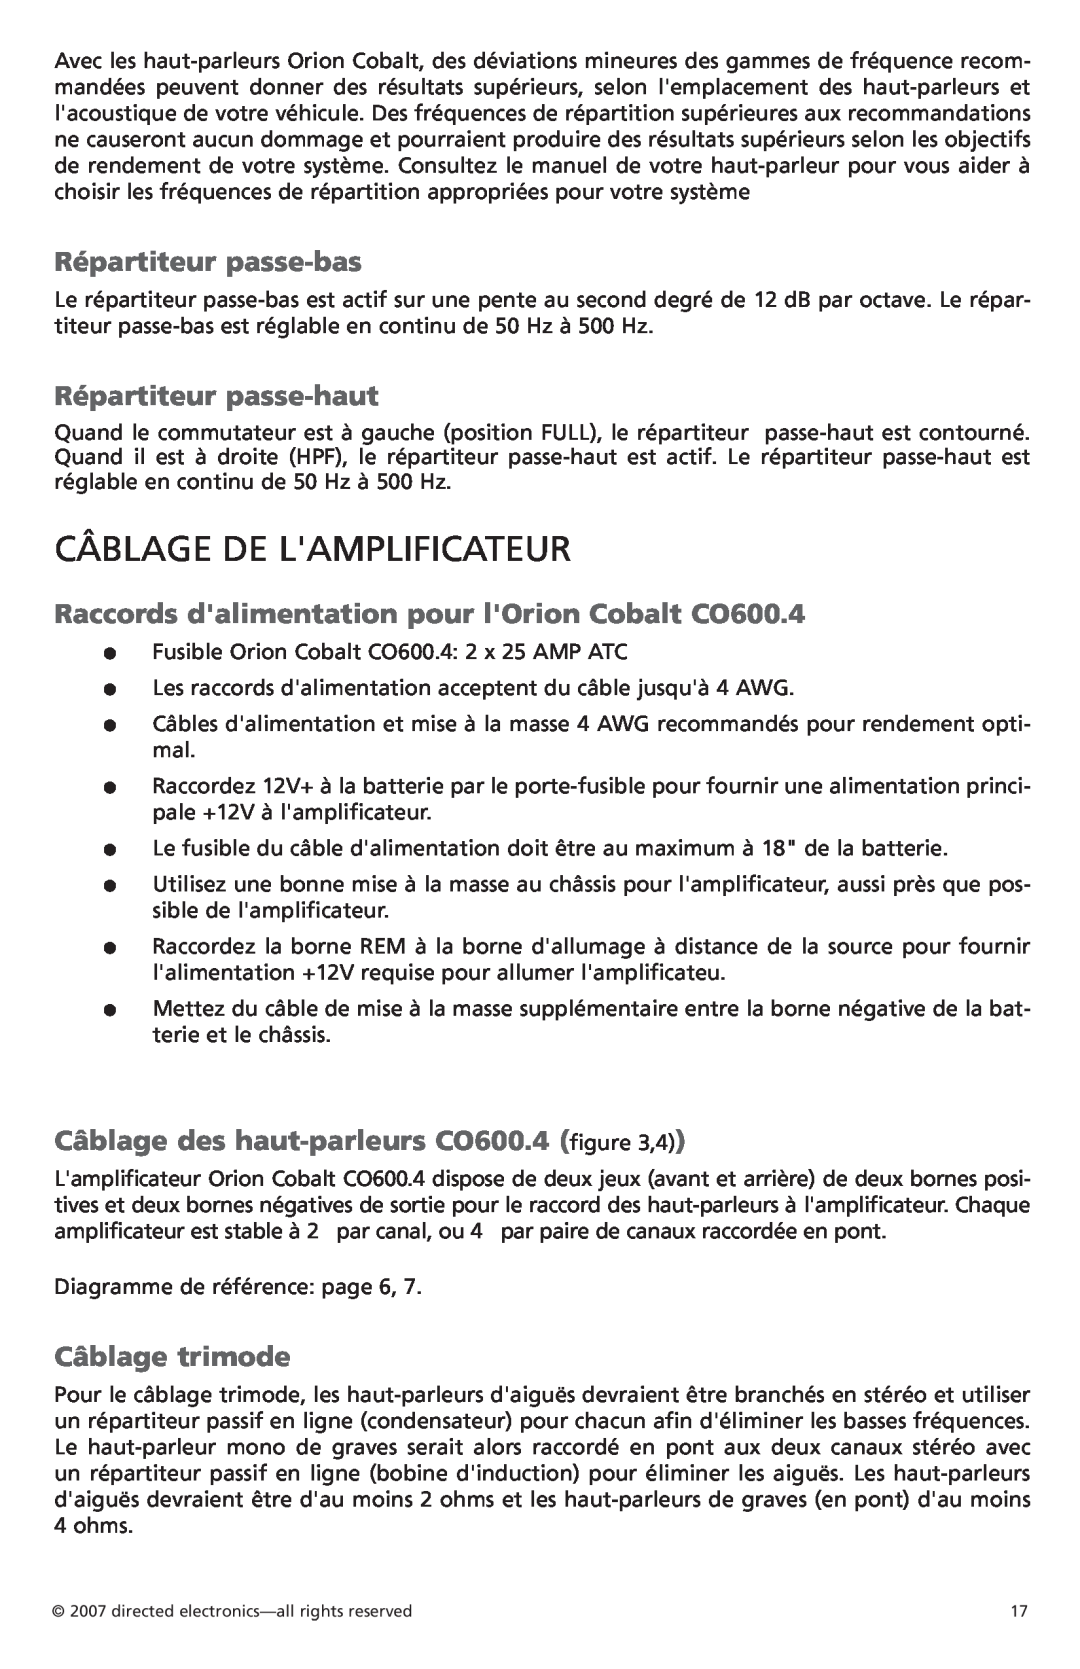 Orion G42110 Câblage De Lamplificateur, Répartiteur passe-bas, Répartiteur passe-haut, Câblage des haut-parleursCO600.4 ,4 